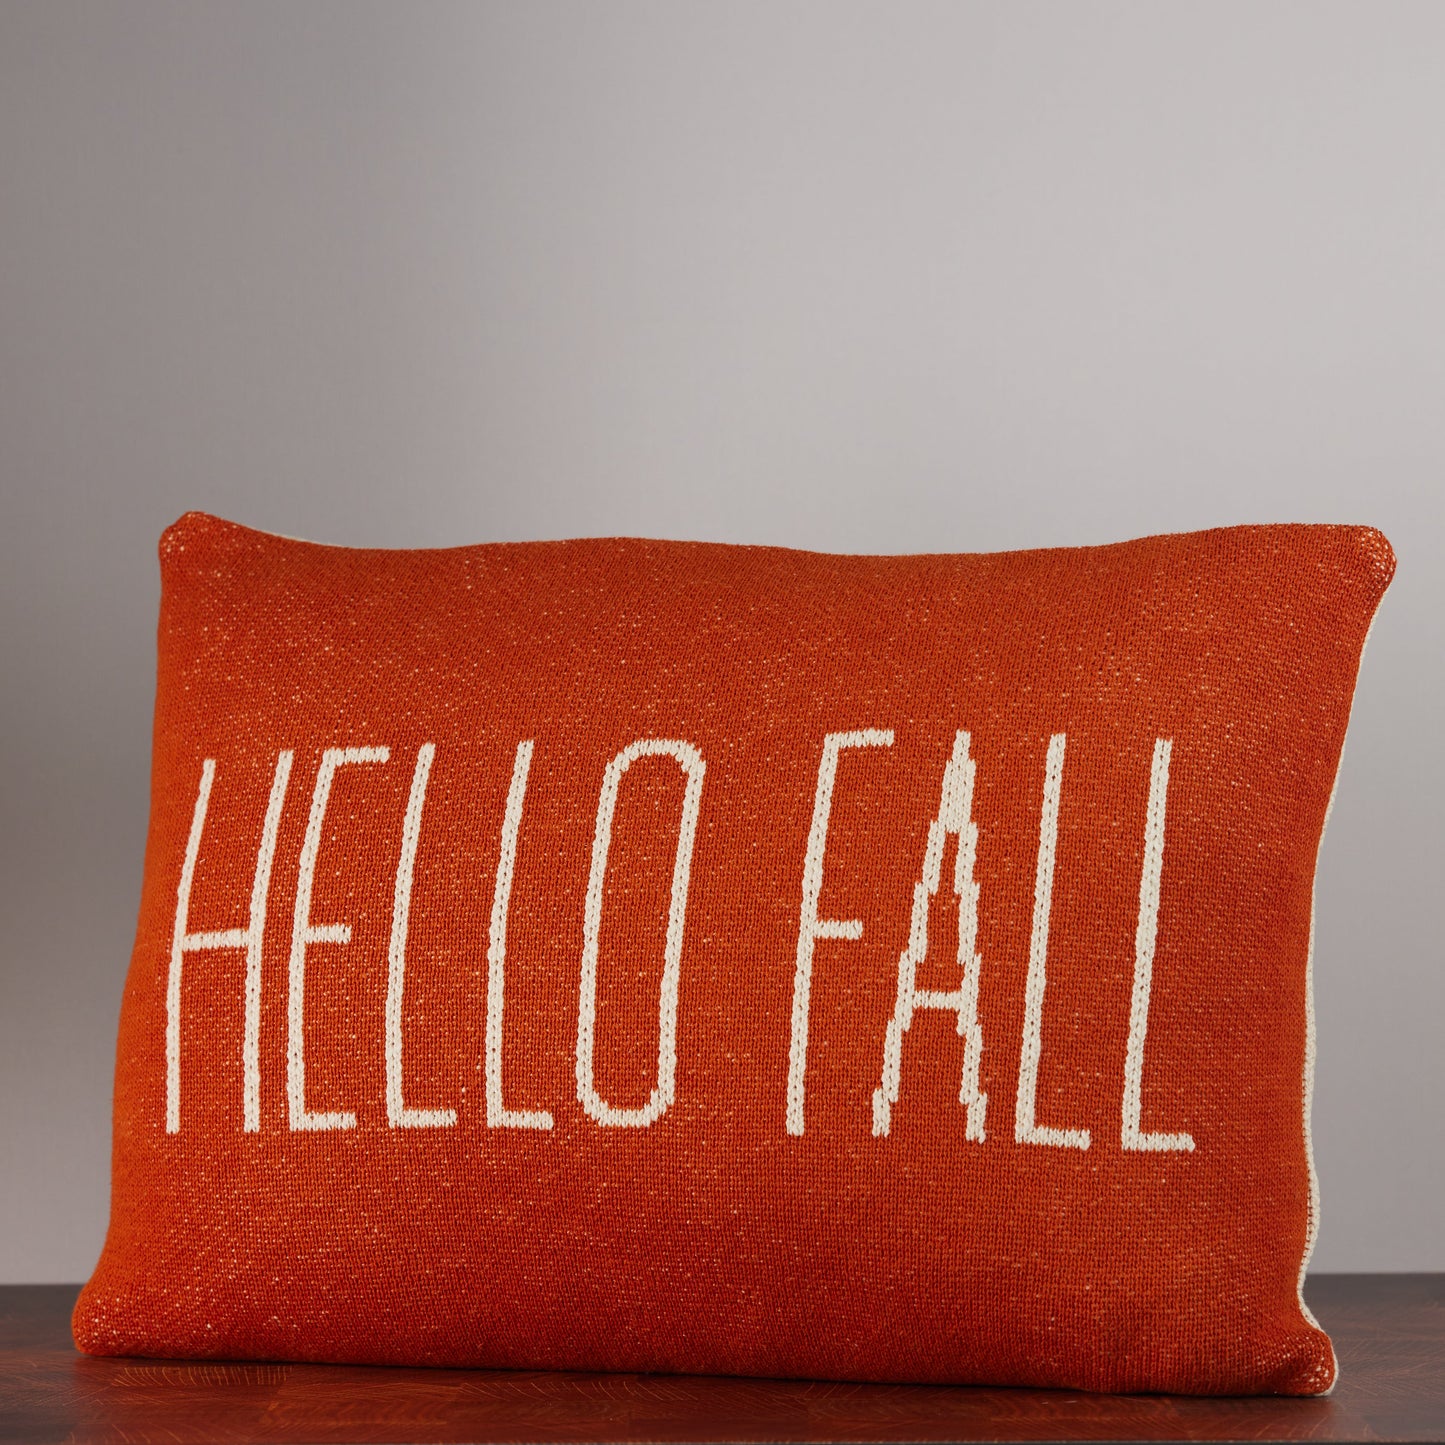 Hello Autumn- Woven Pillow